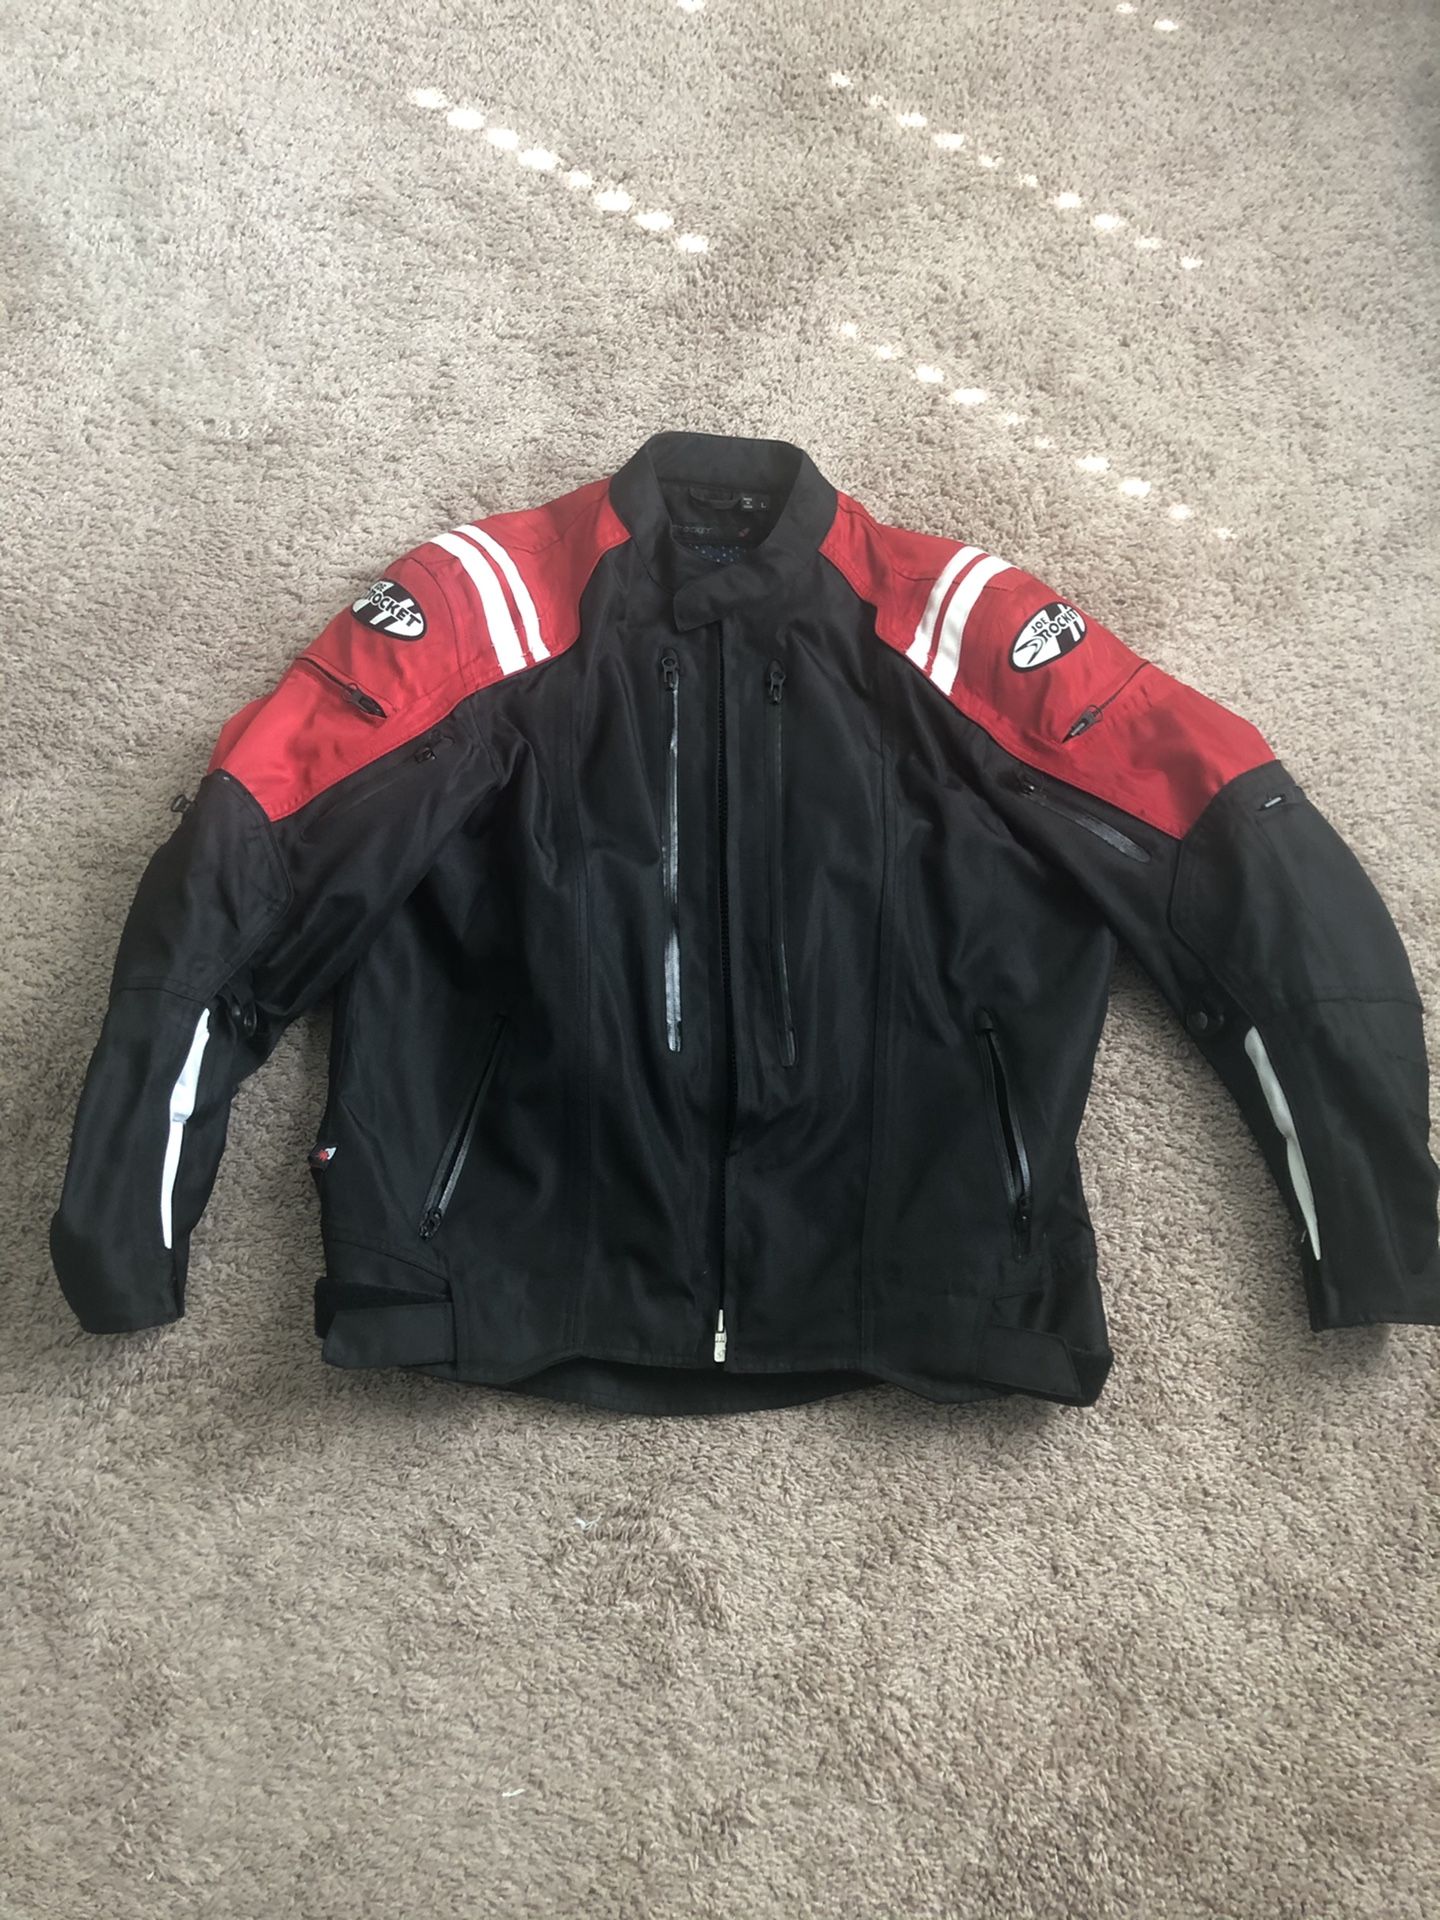 Joe Rocket Red & Black Motorcycle Jacket (Large)